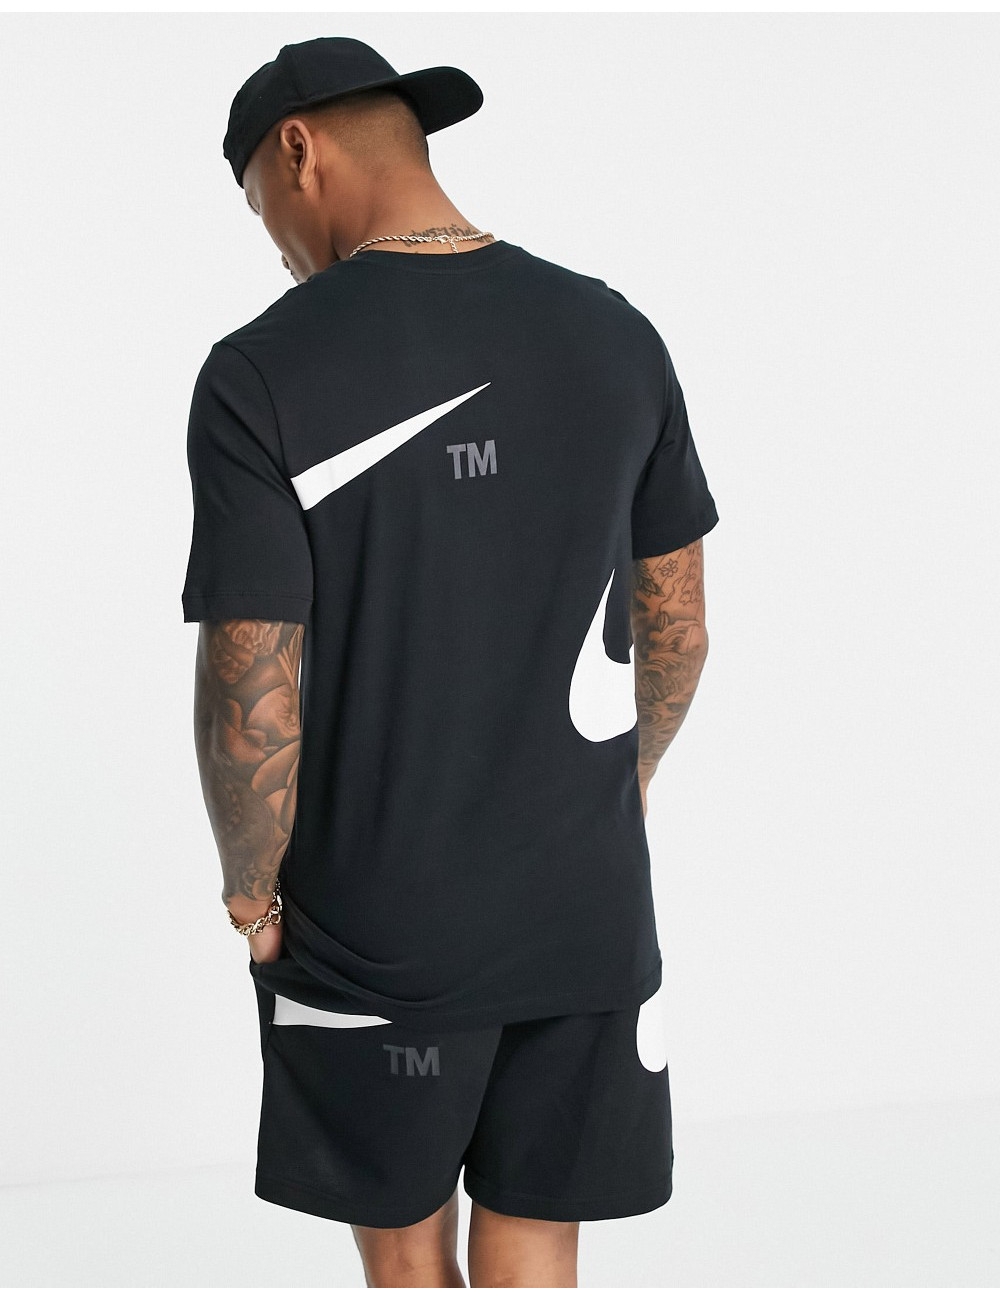 Nike Swoosh t-shirt in black